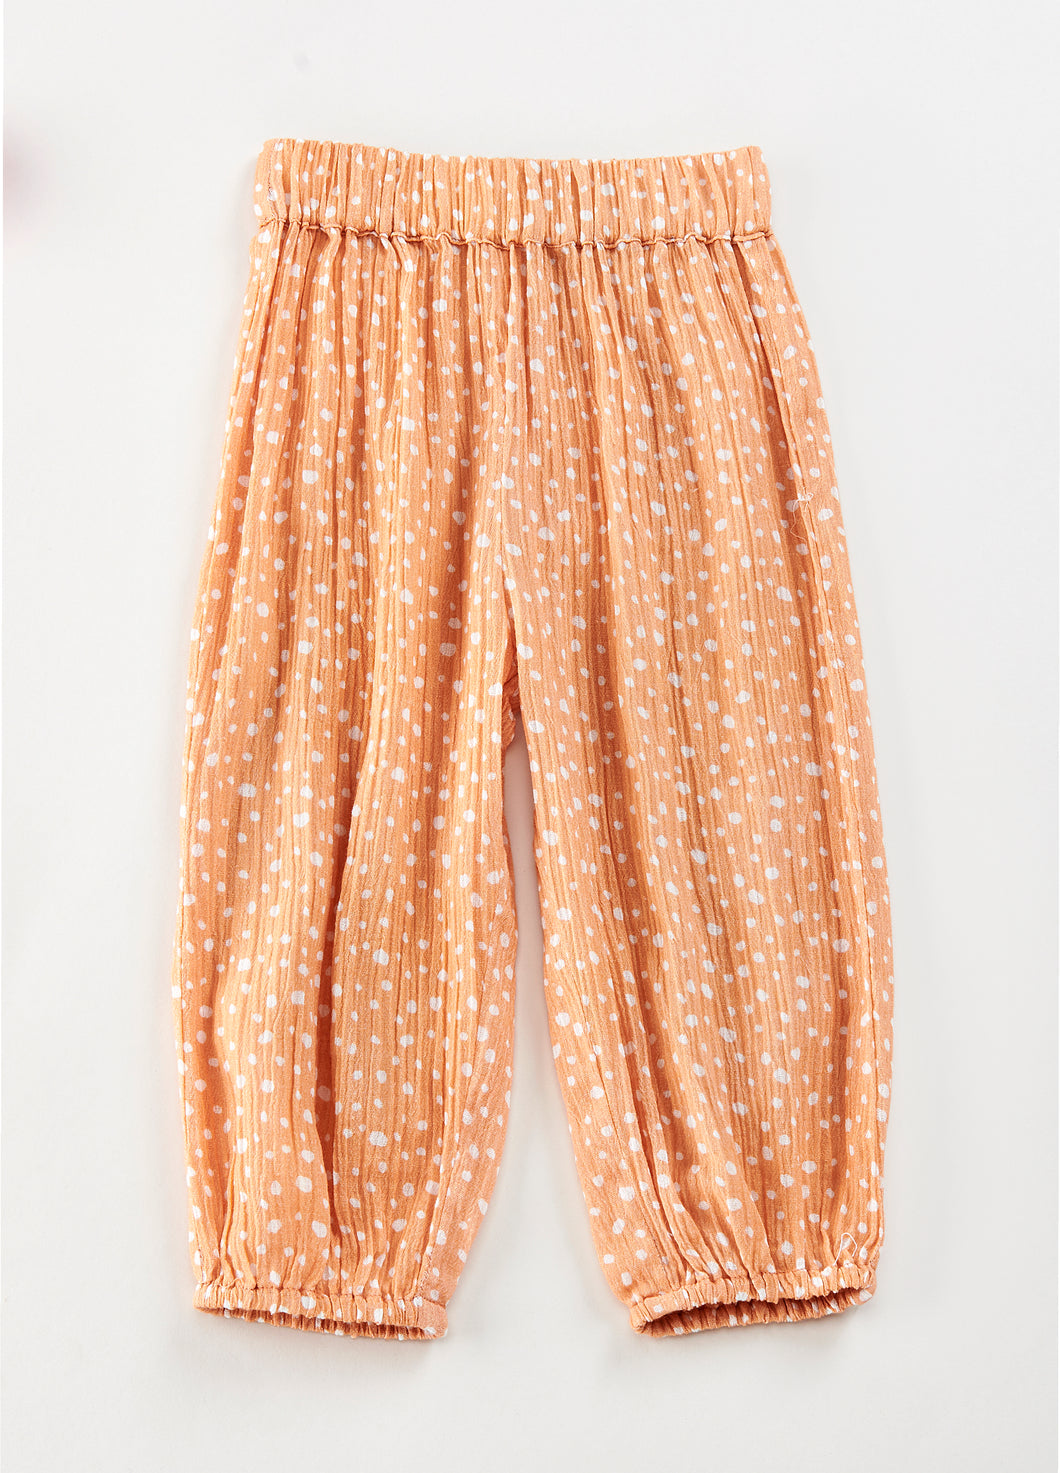 Boho Style Pants-Orange Dots